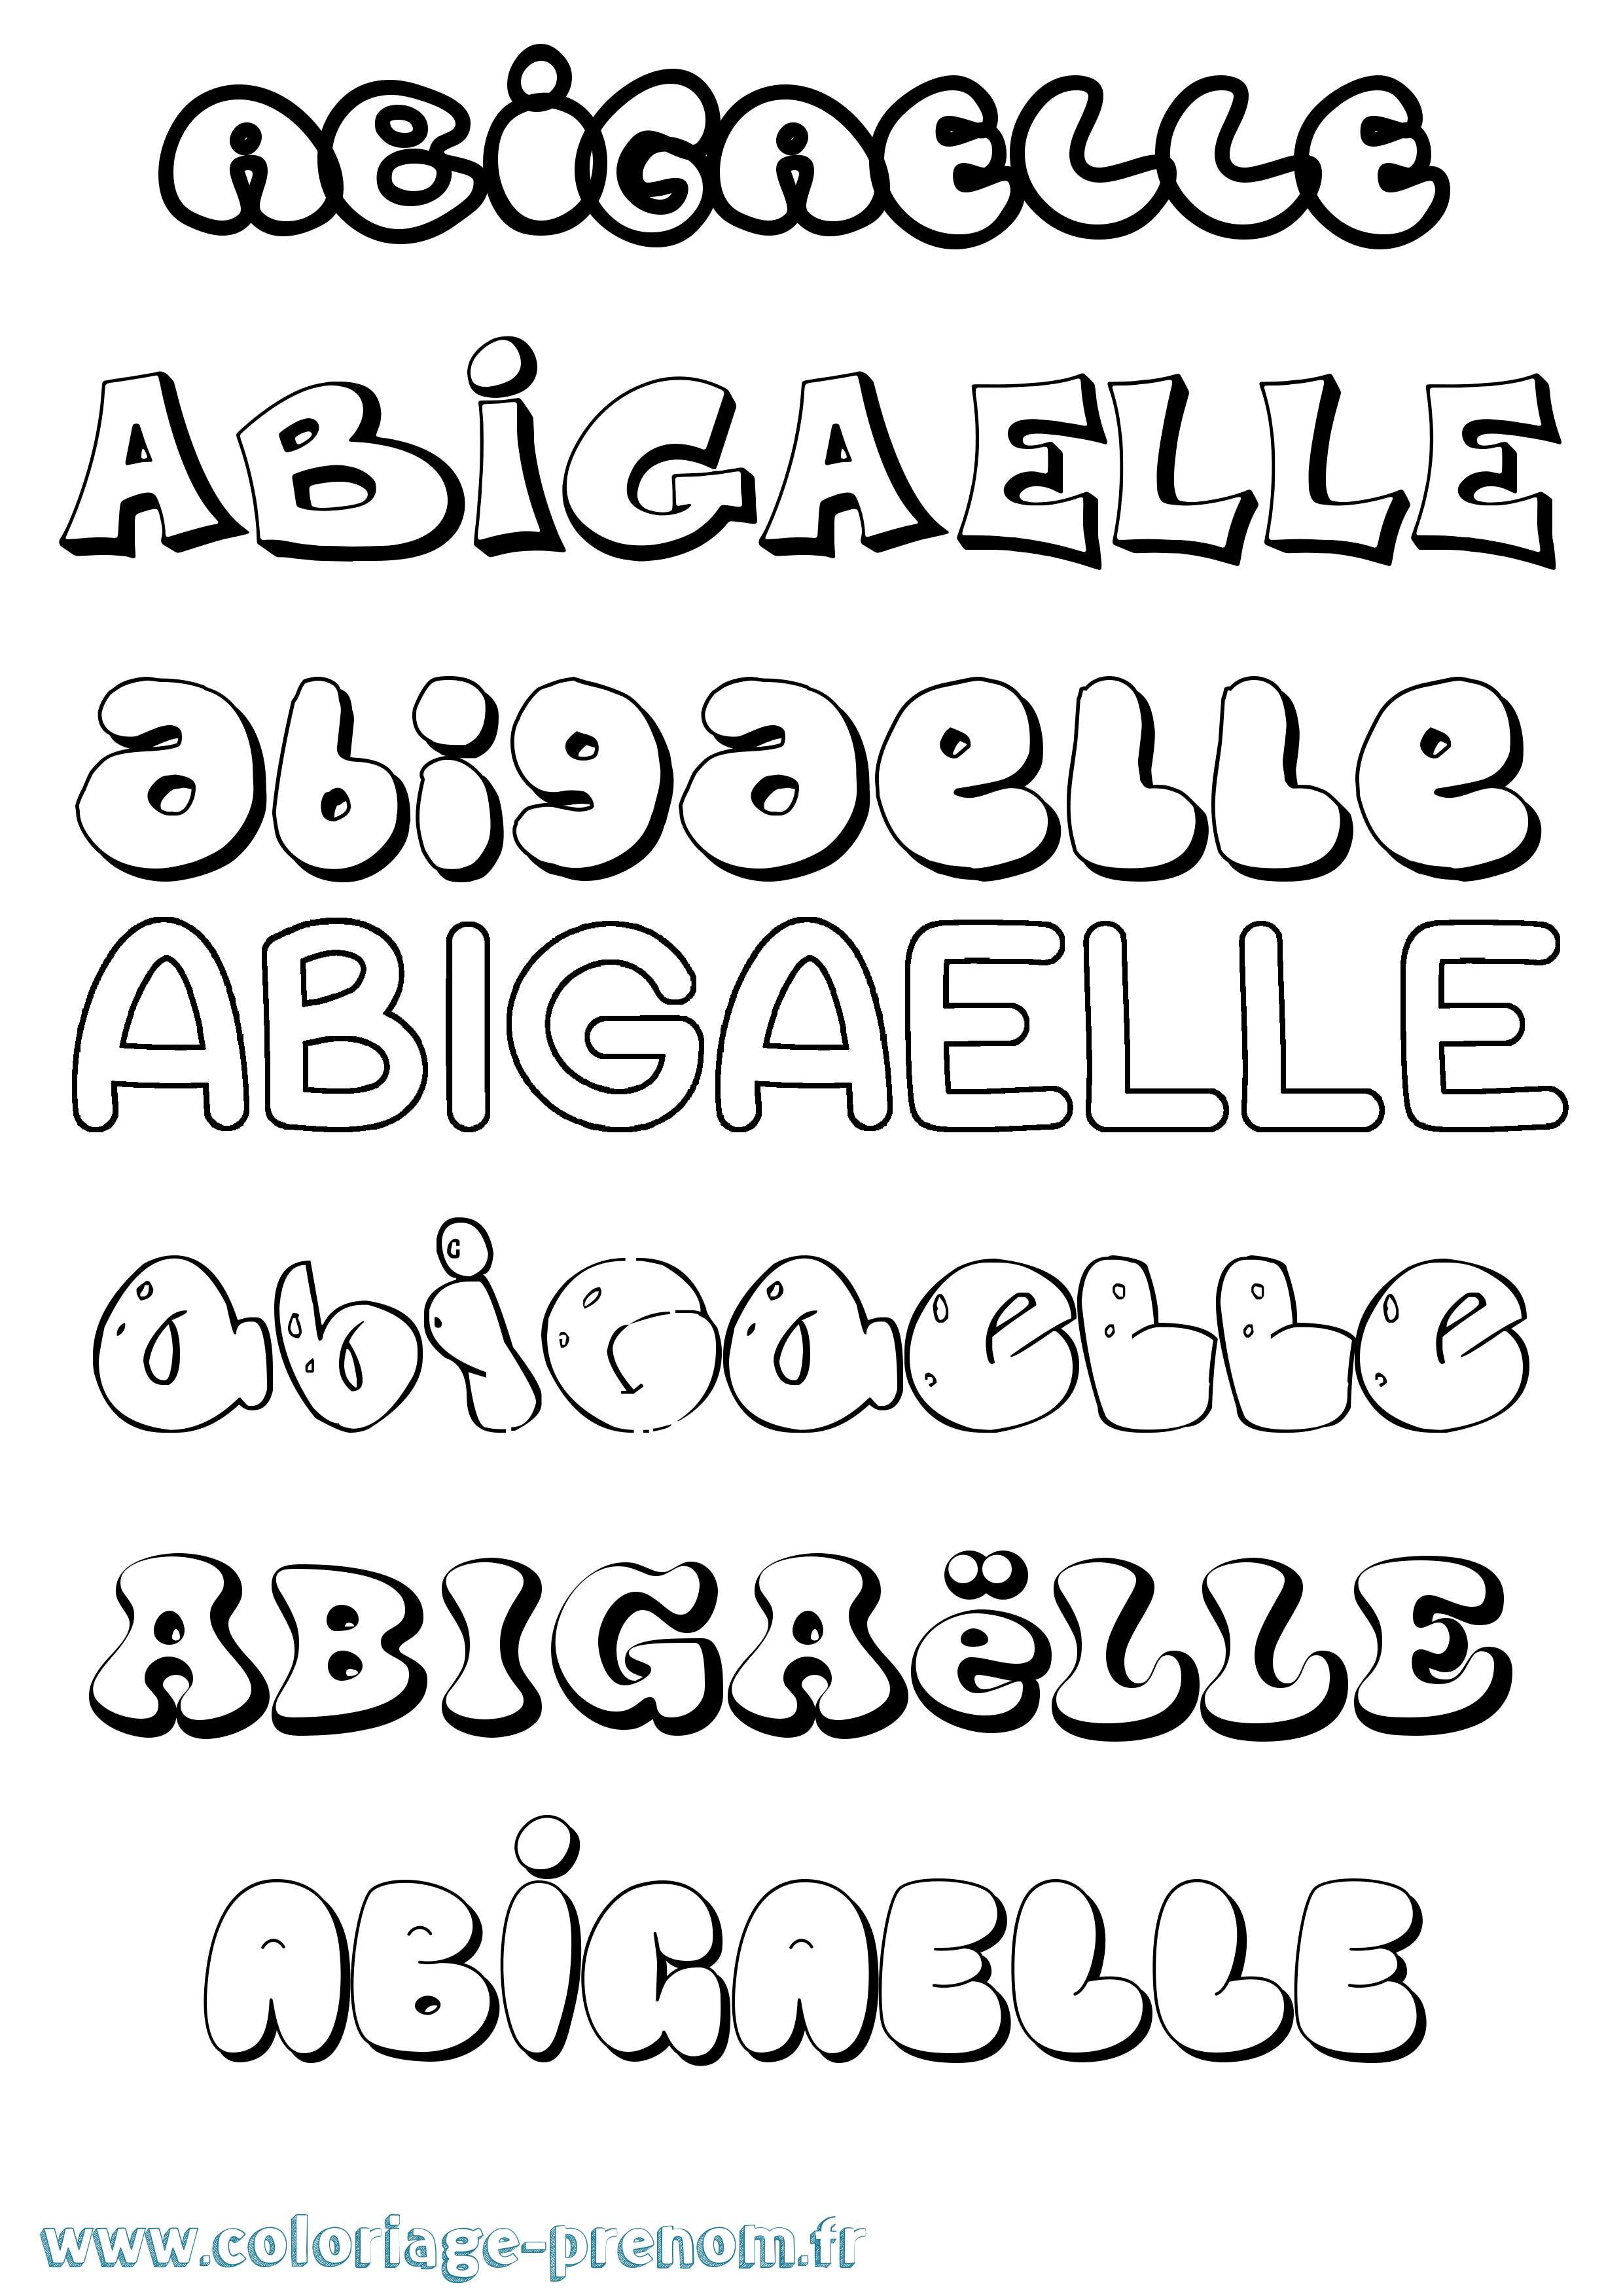 Coloriage prénom Abigaëlle